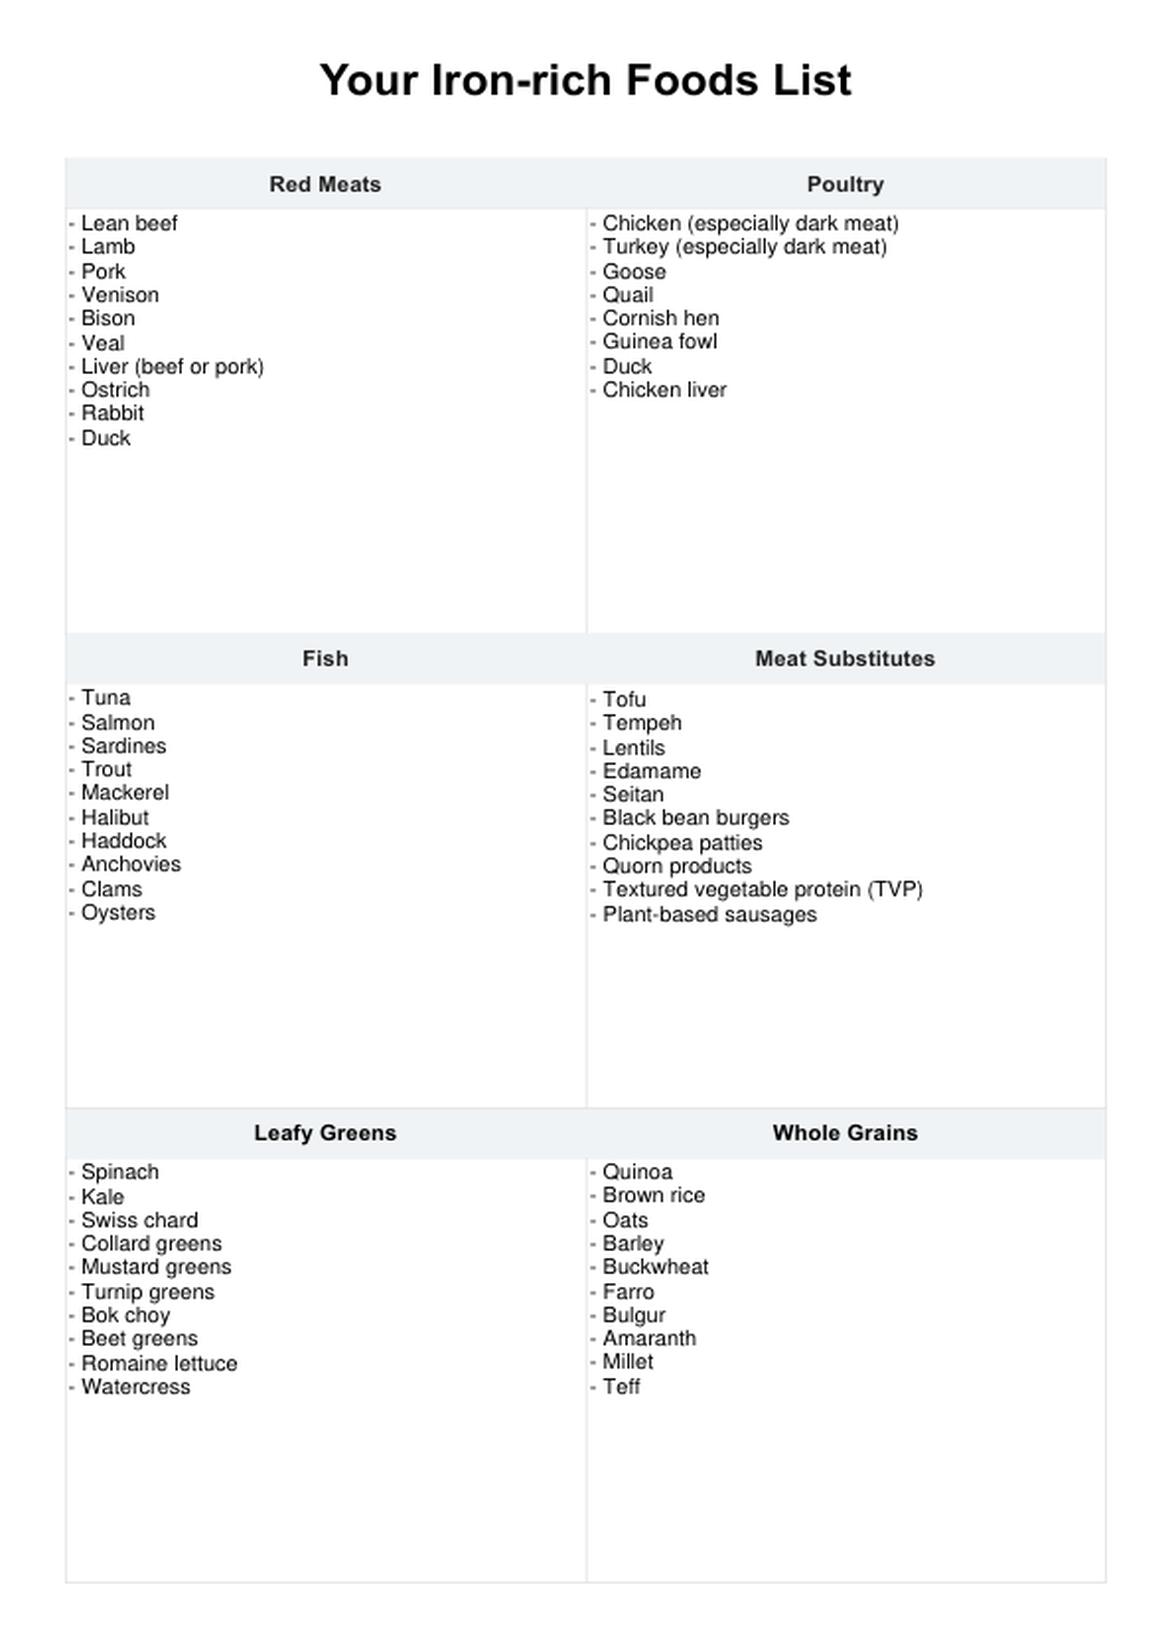 Iron-rich Foods List PDF Example